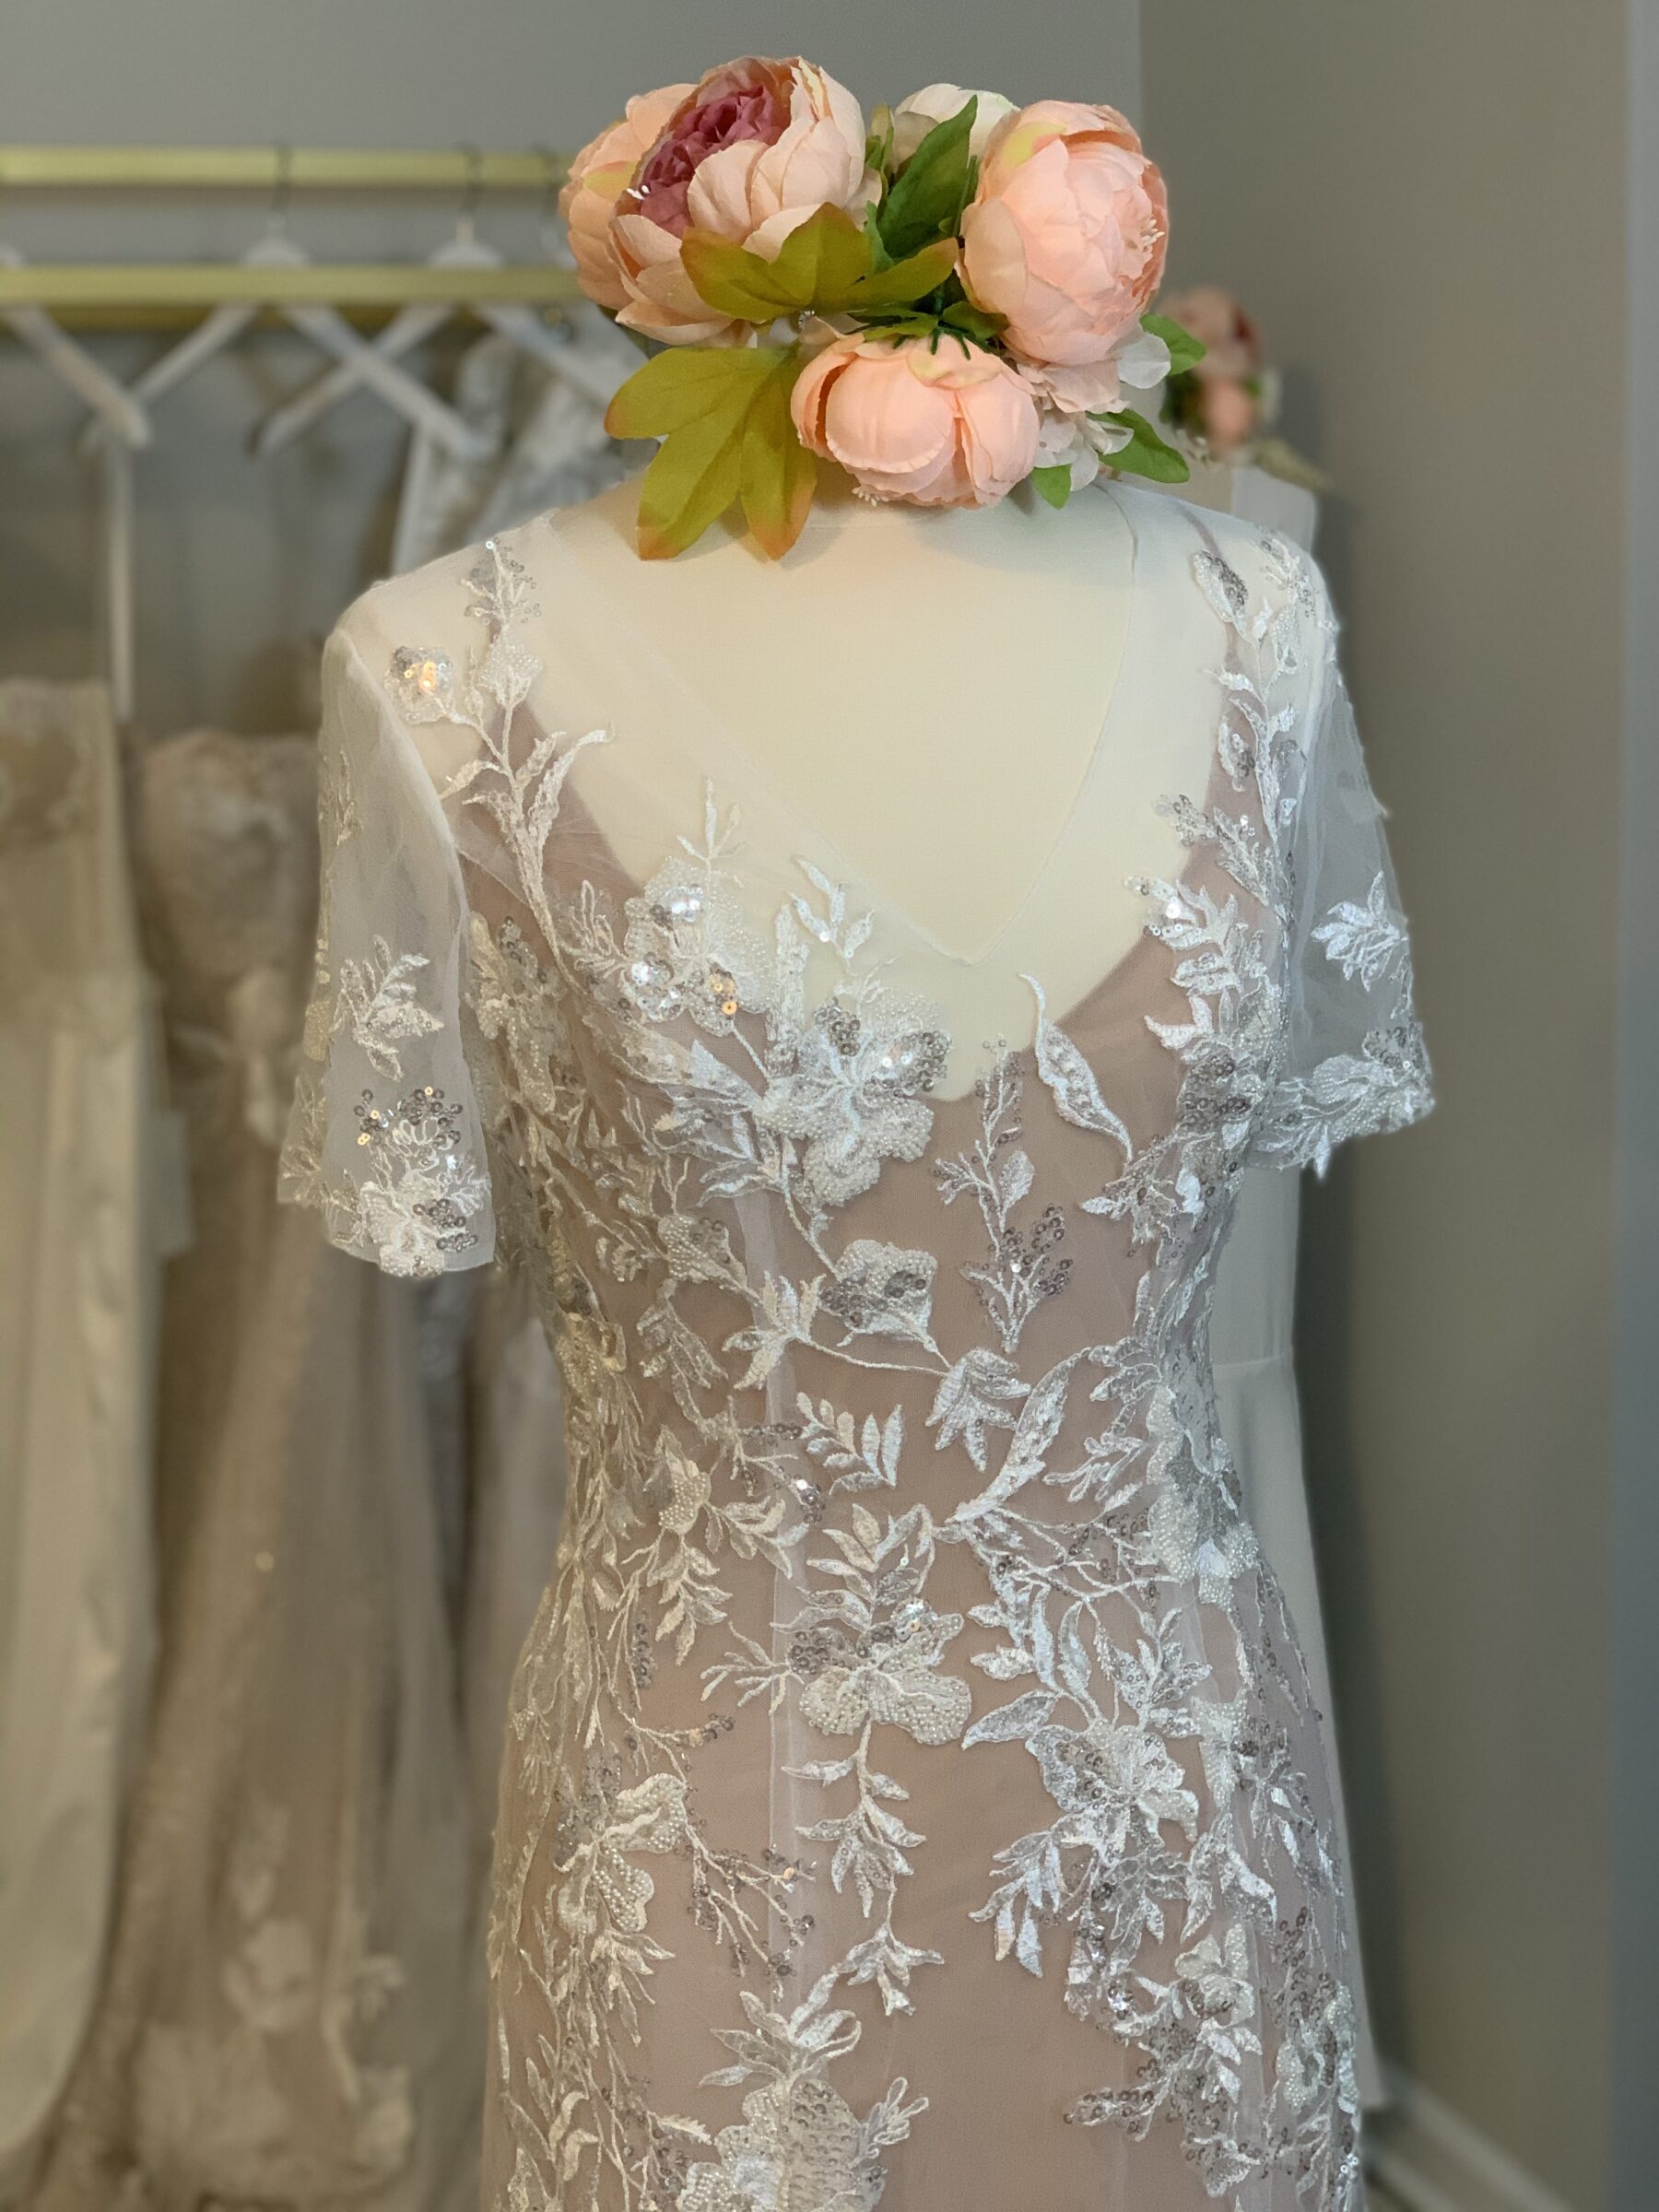 Meet local Nashville wedding dress designer Jamie Myranda on Nashville Bride Guide